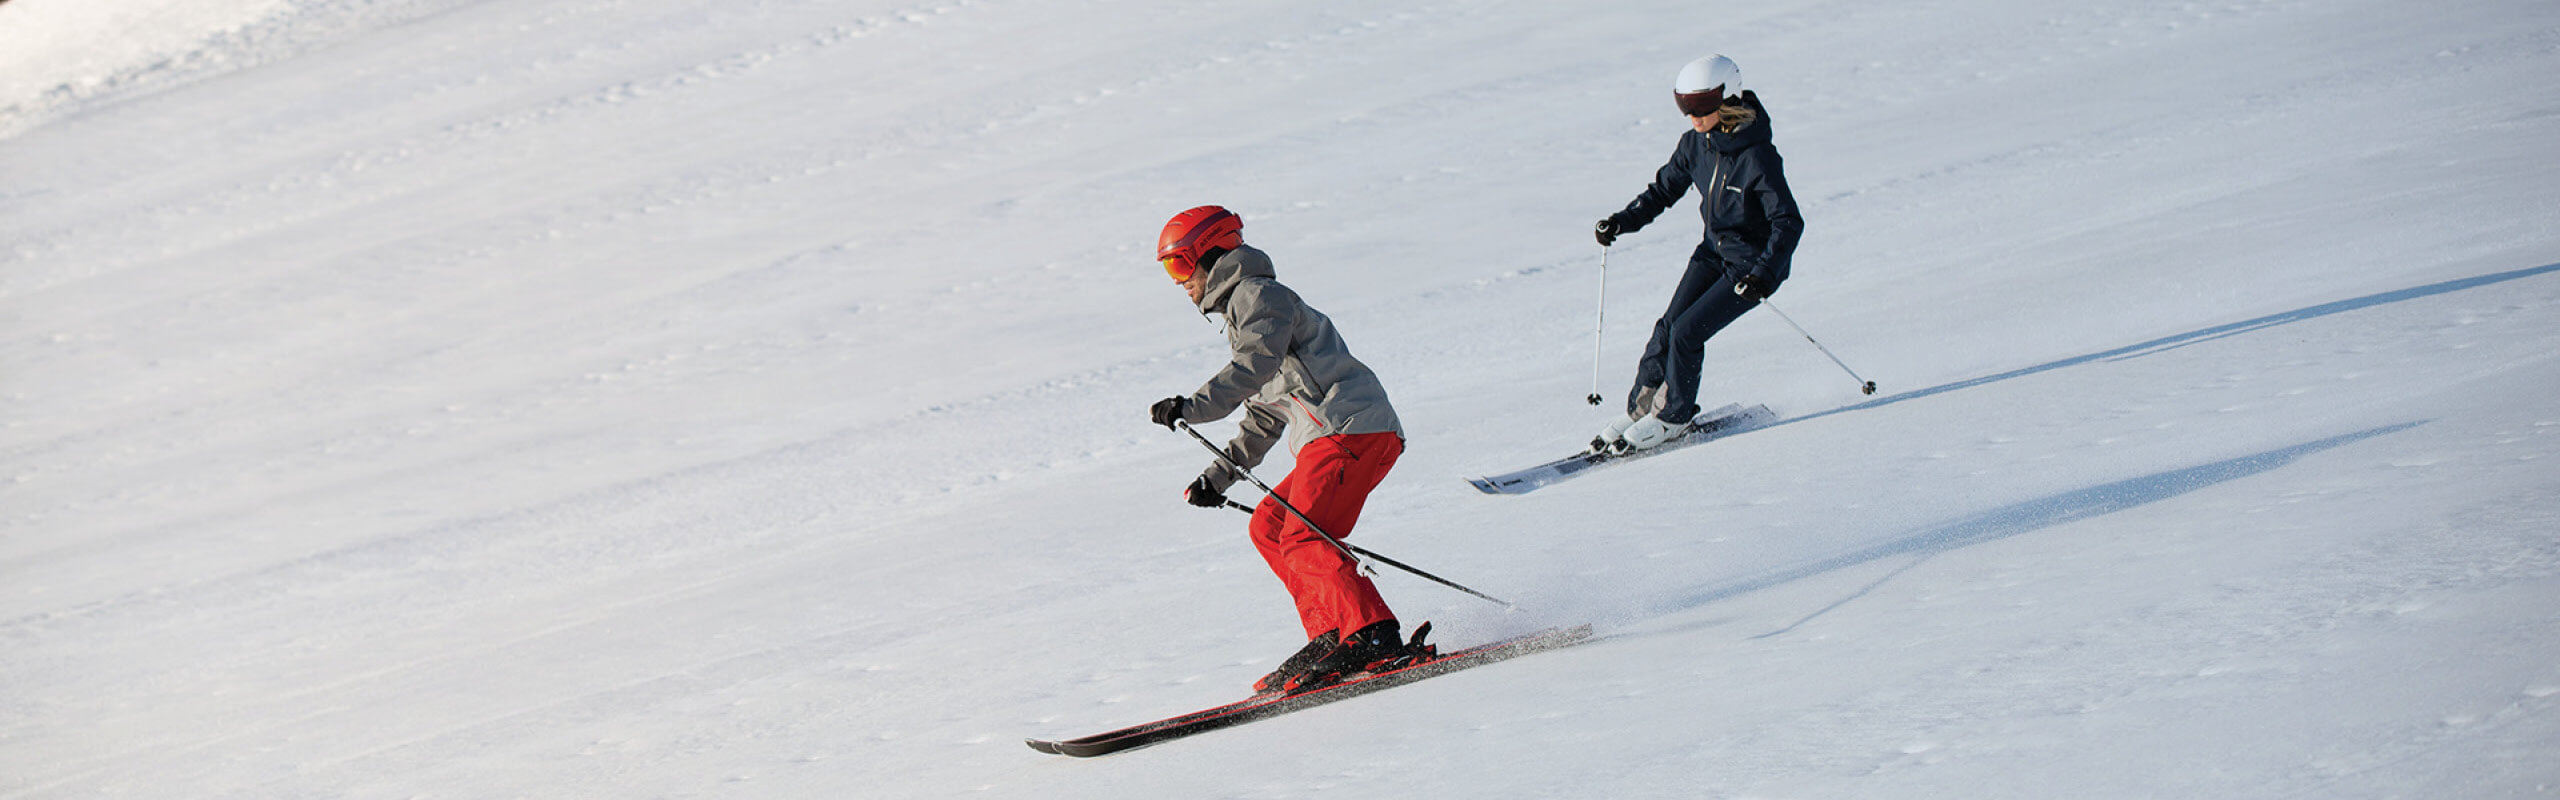 narty-zjazdowe-ski-team